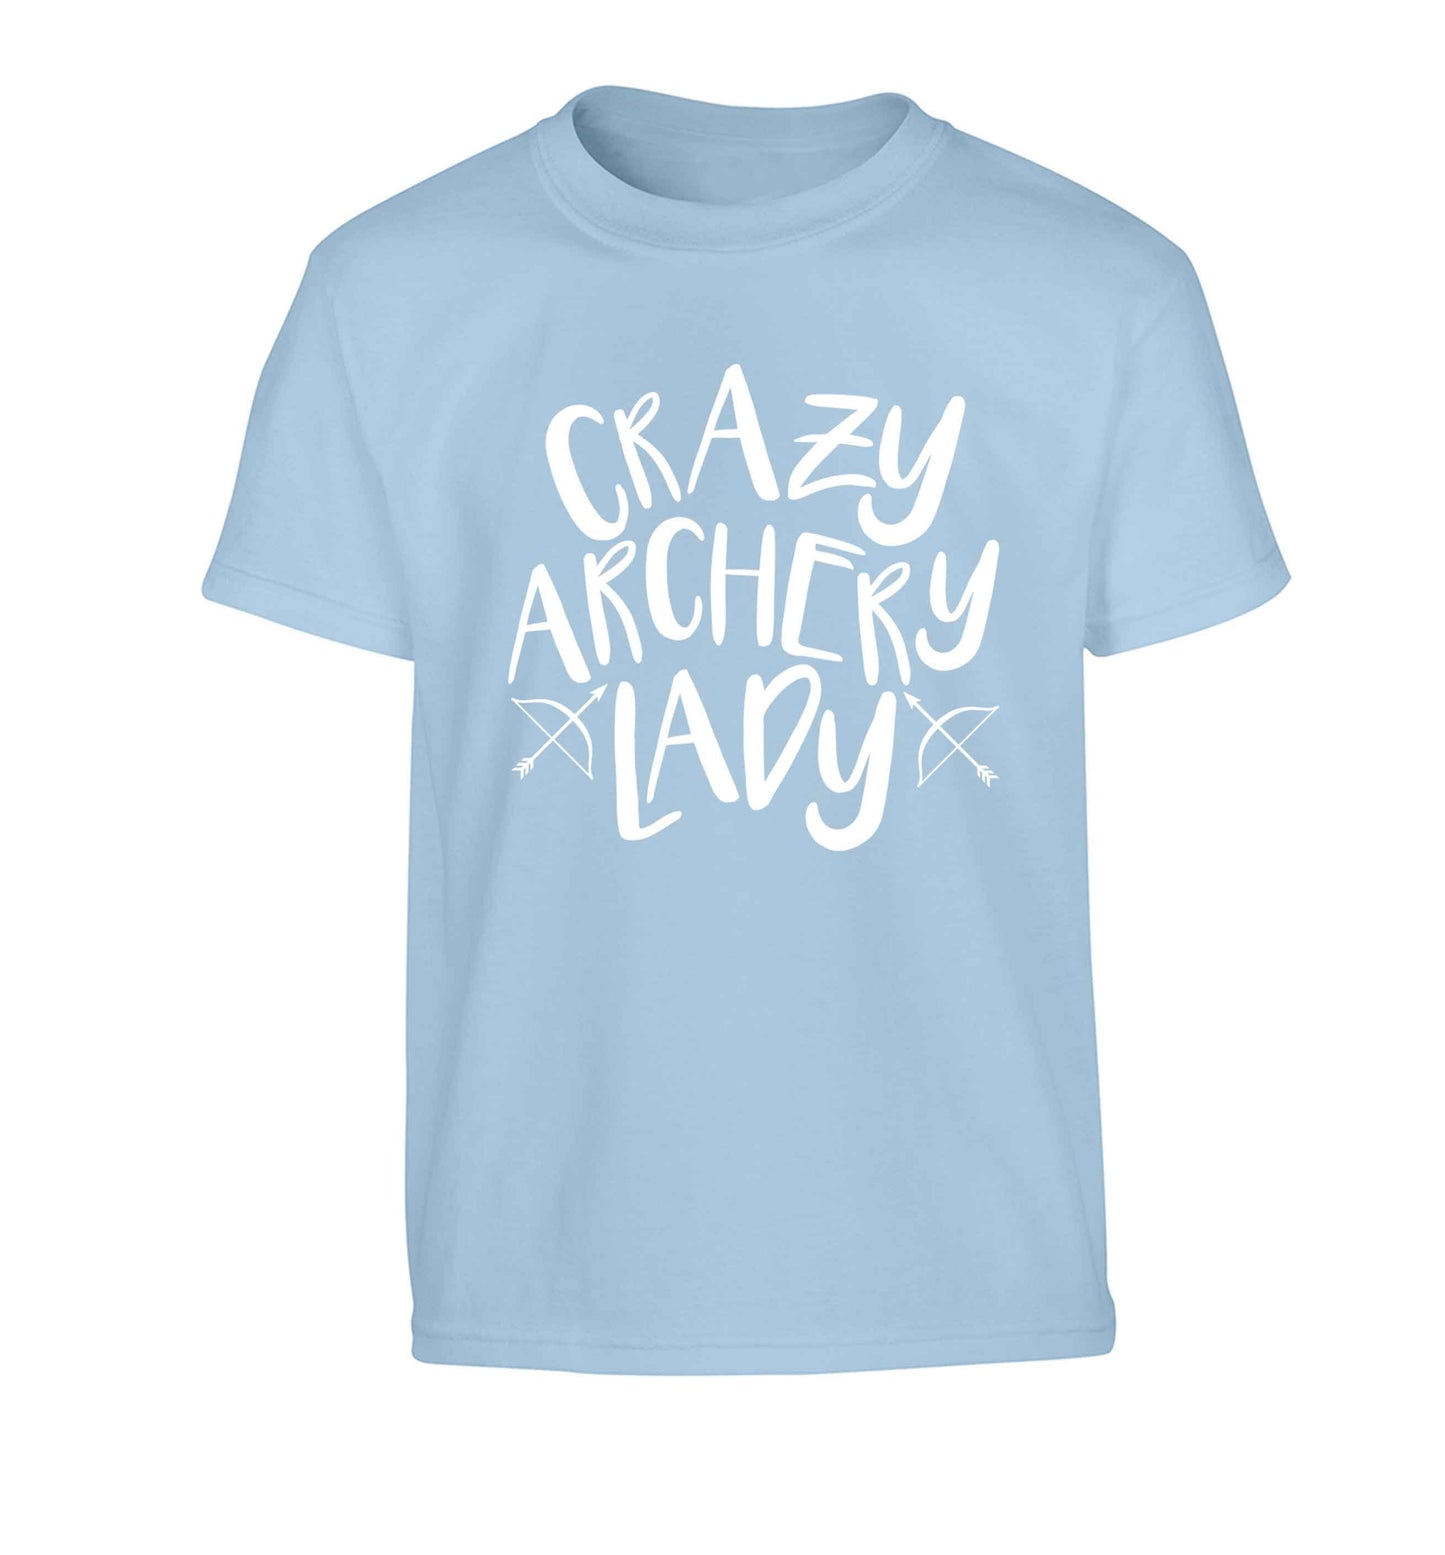 Crazy archery lady Children's light blue Tshirt 12-13 Years